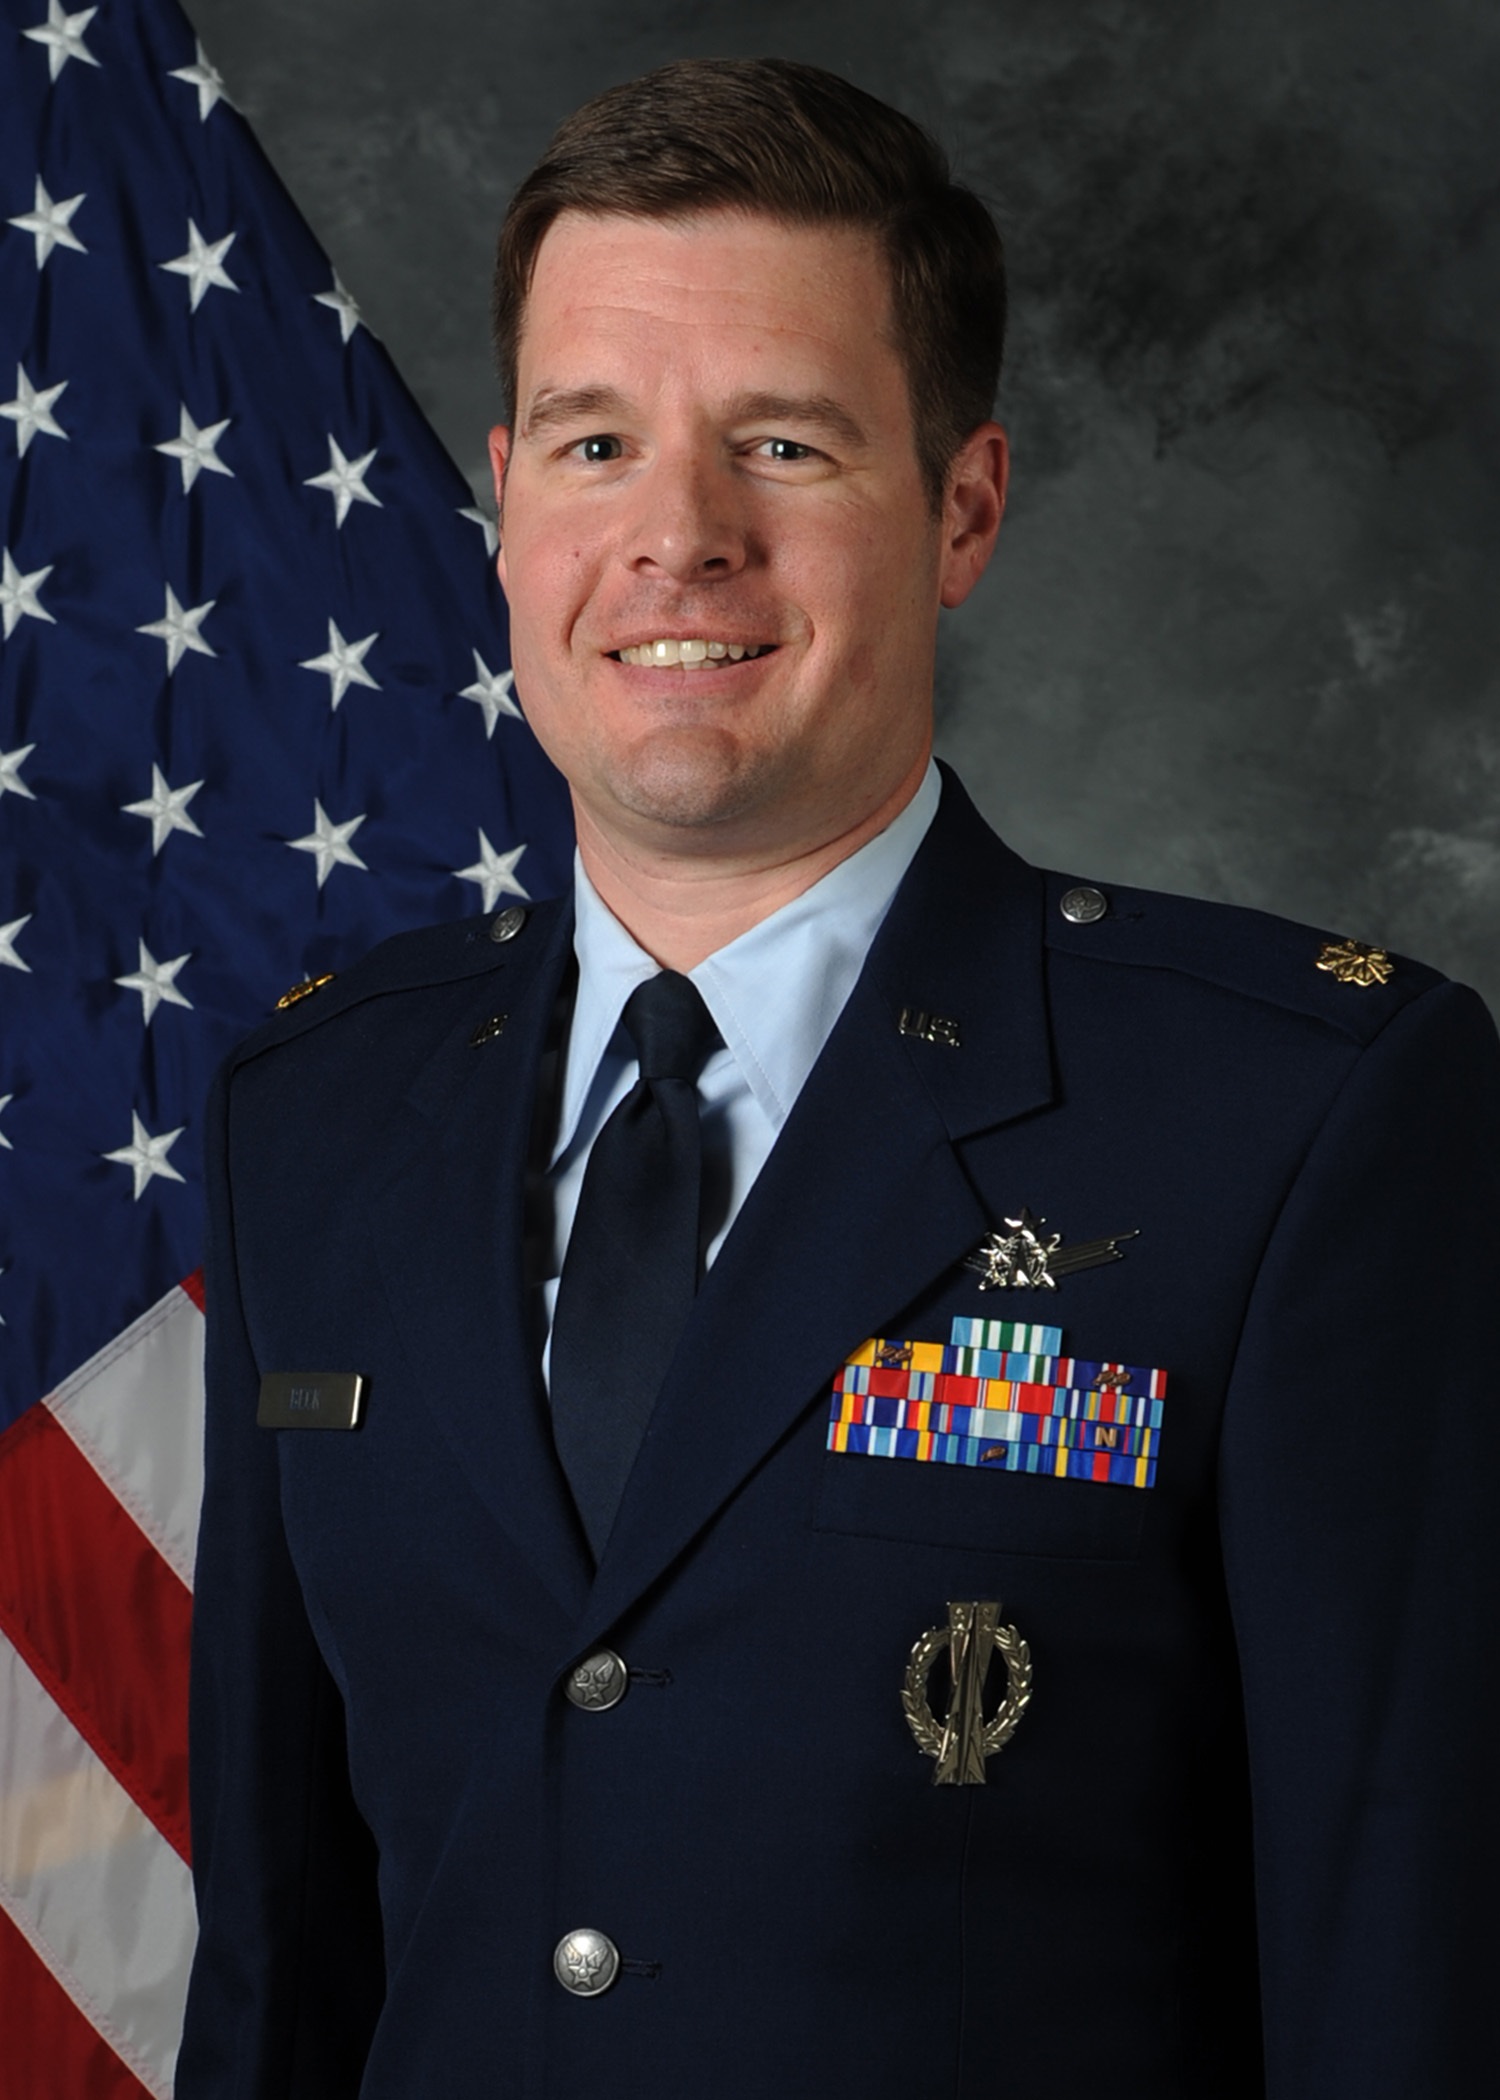 Photo of Maj Mathew Beck, USAF wearing military uniform